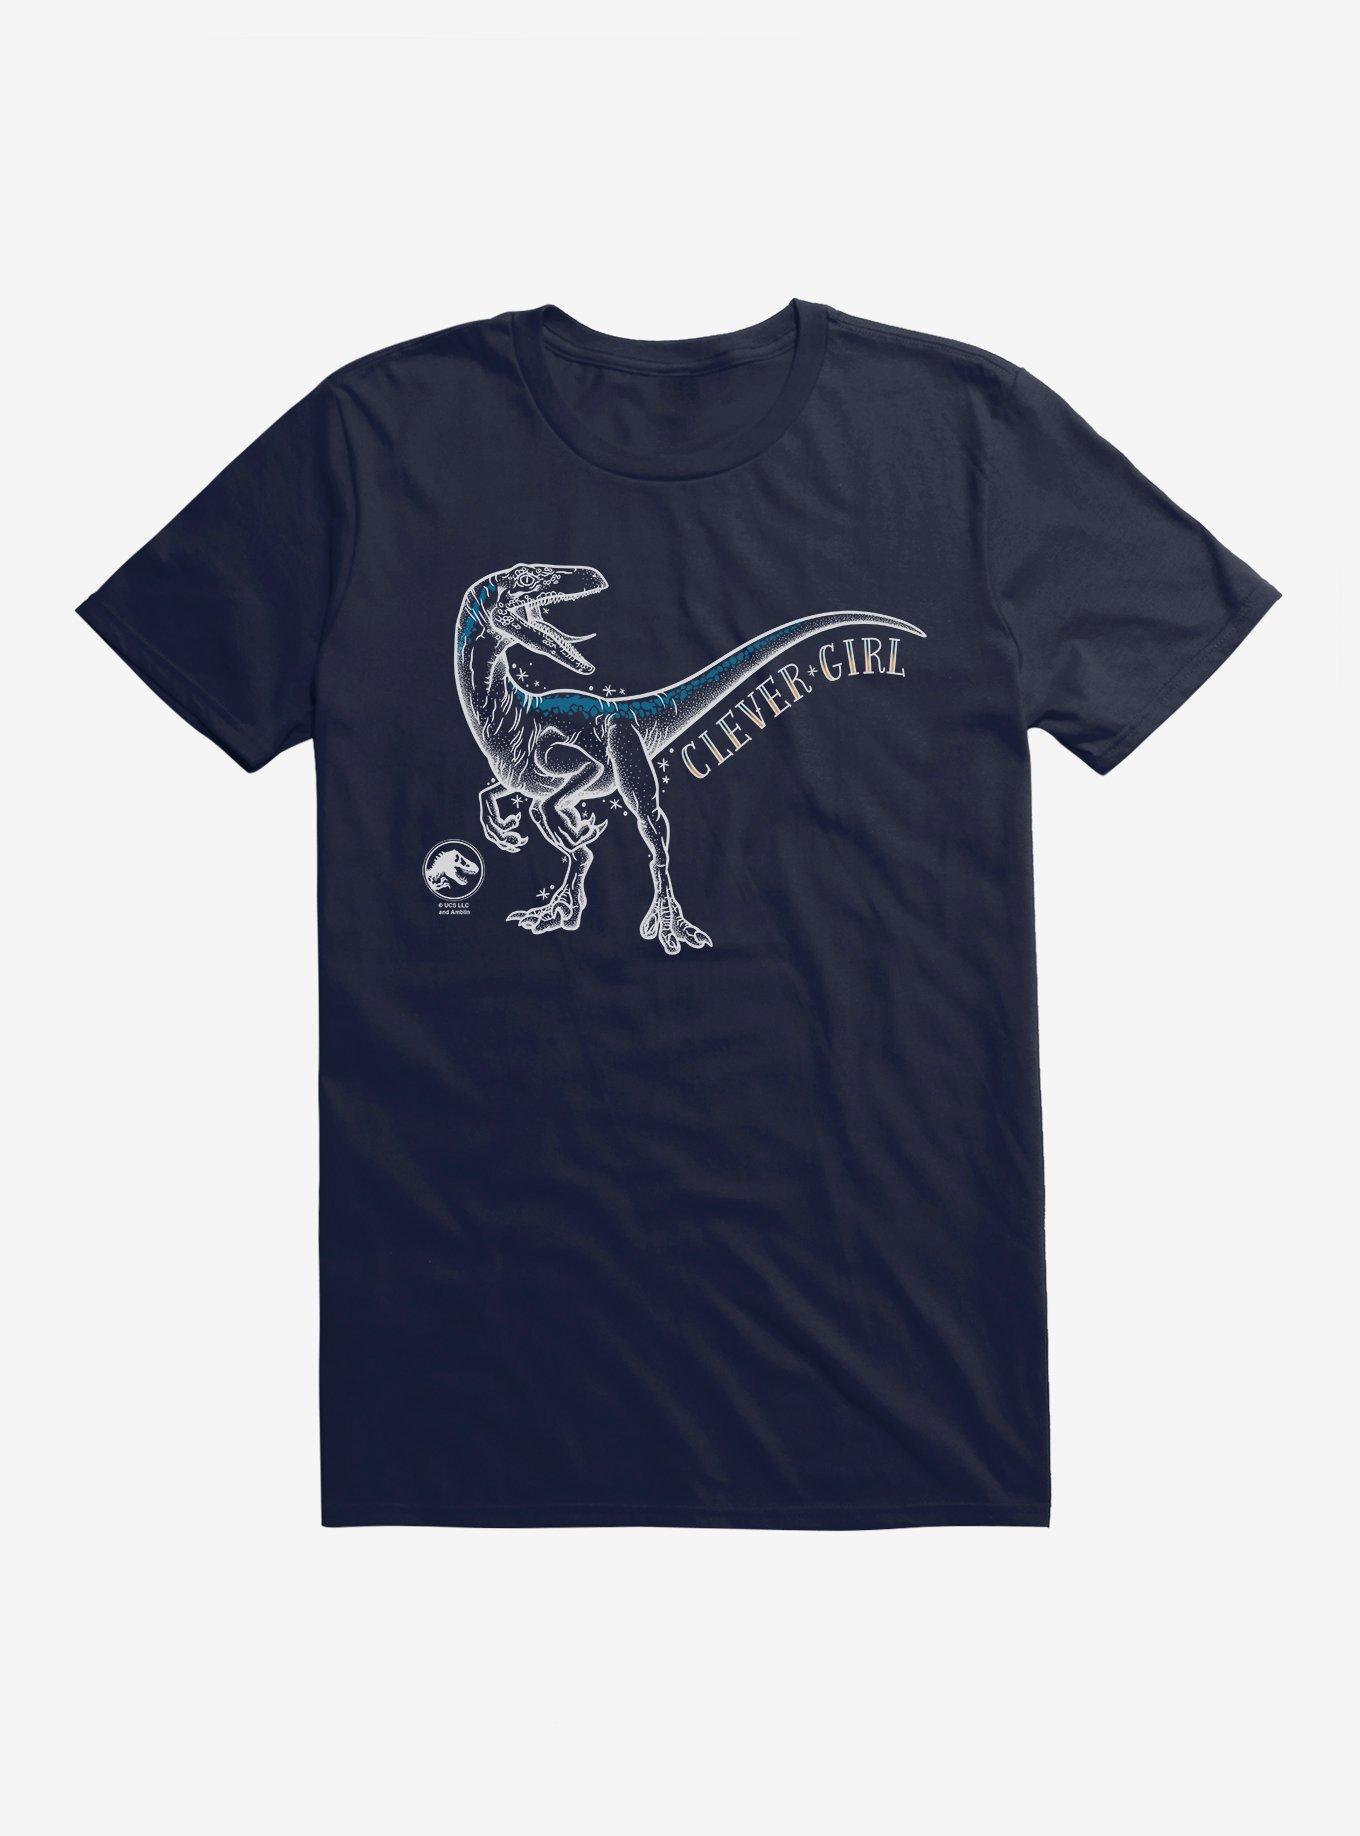 Jurassic World Clever Girl Illustrated T-Shirt